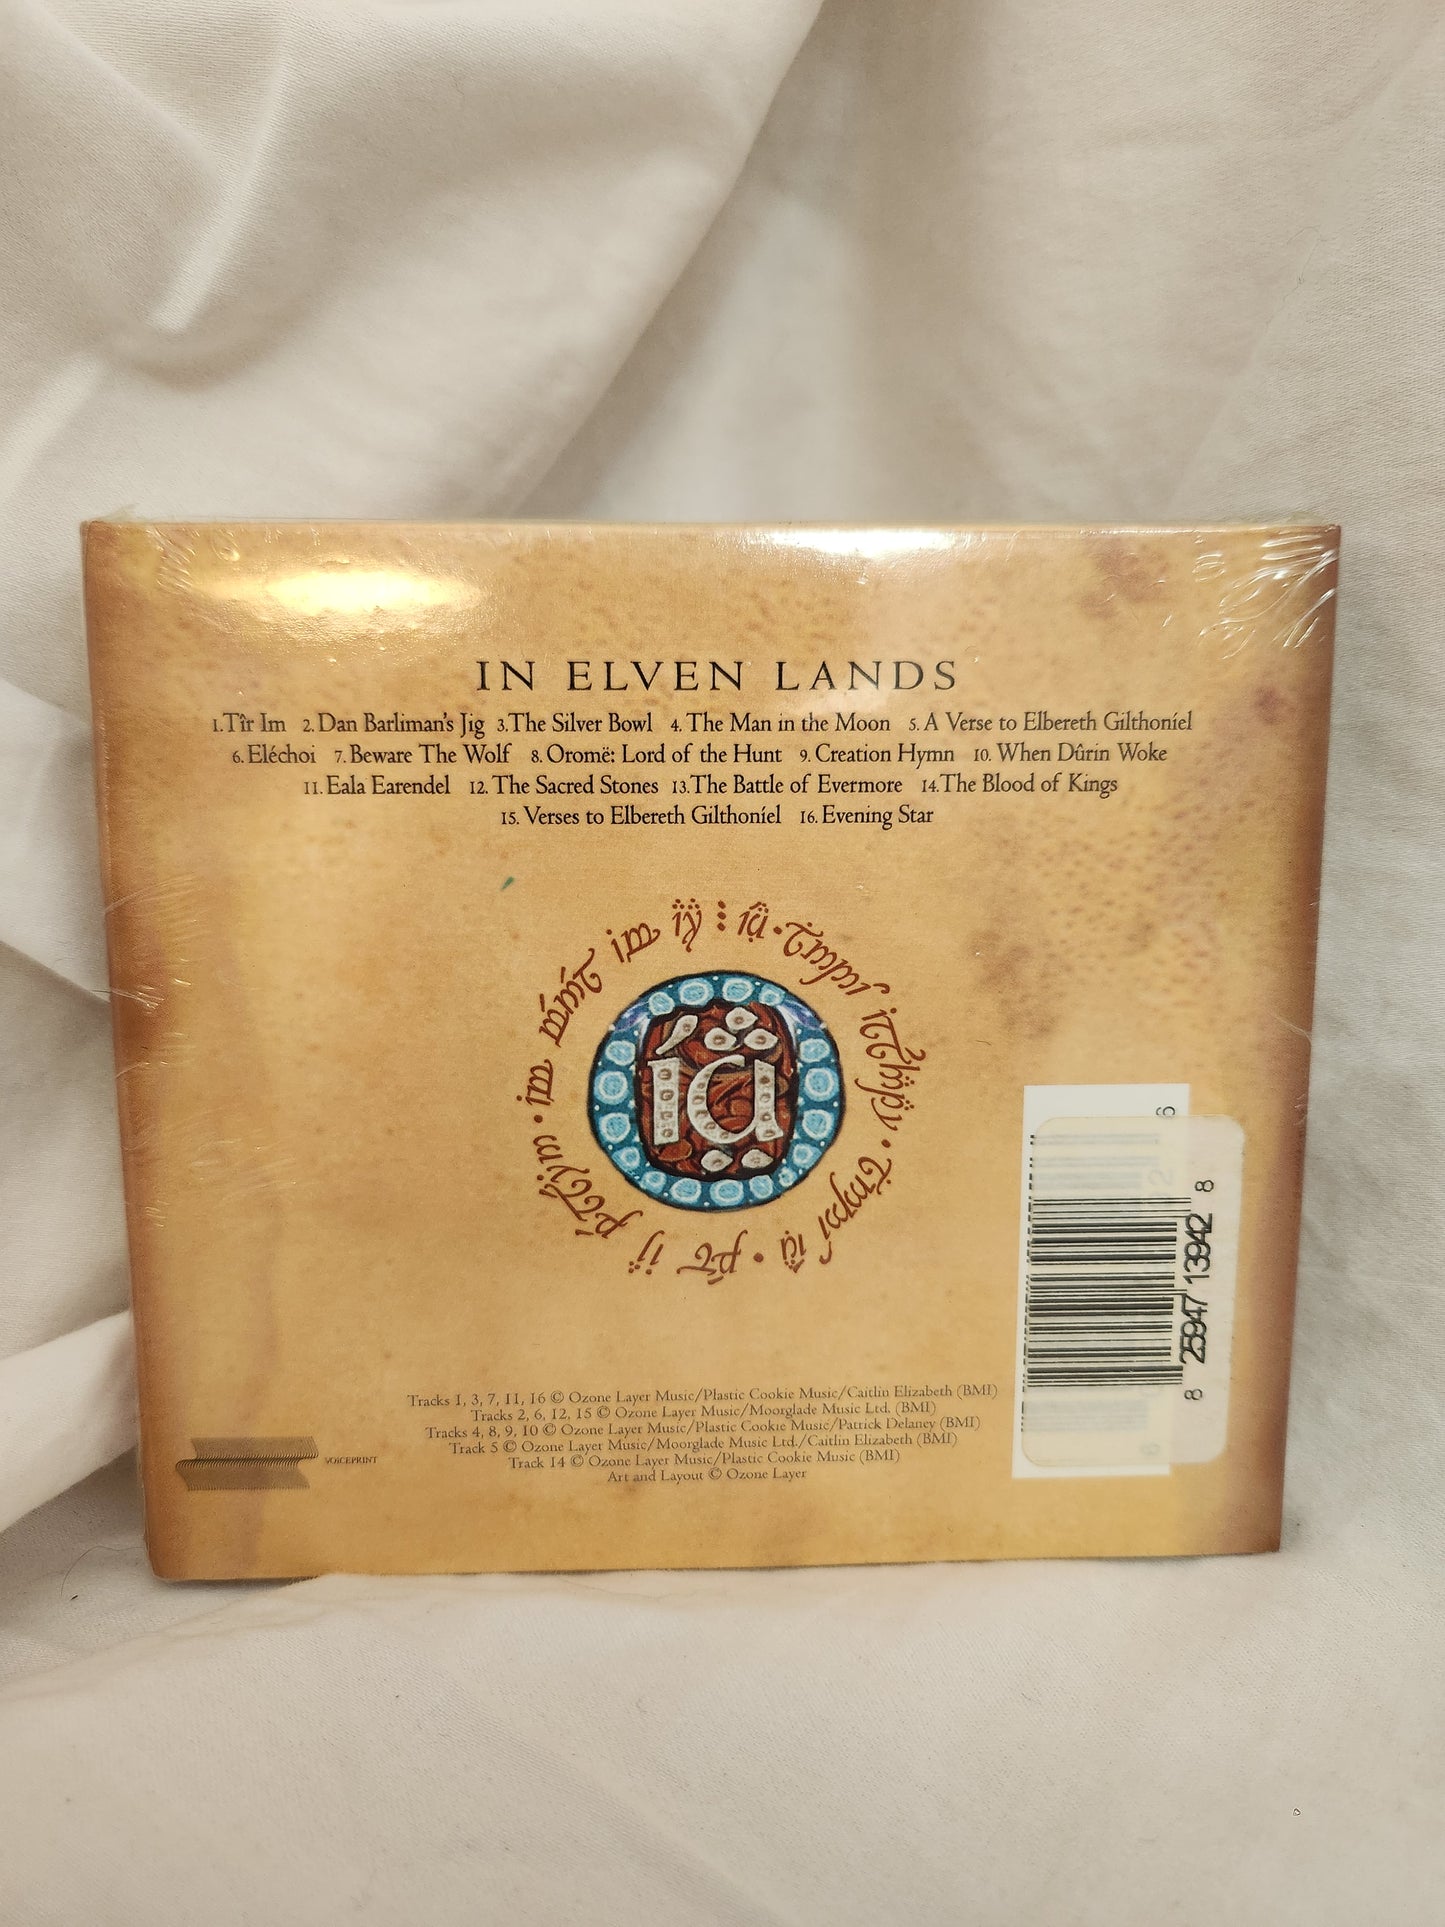 In Elven Lands: The Fellowship CD